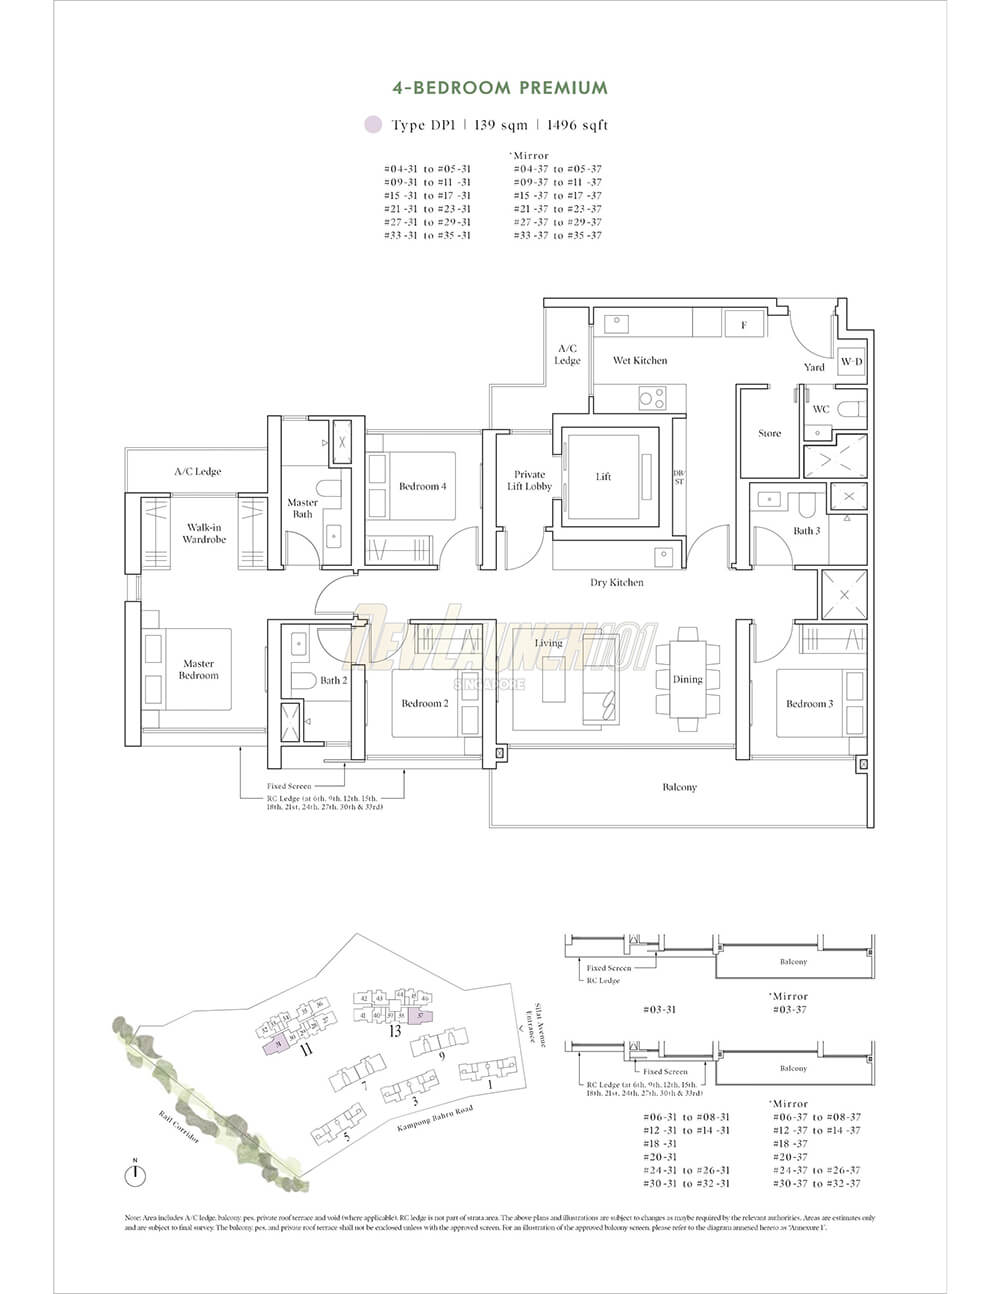 Avenue South Residence 4-Bedroom Premium Type DP1